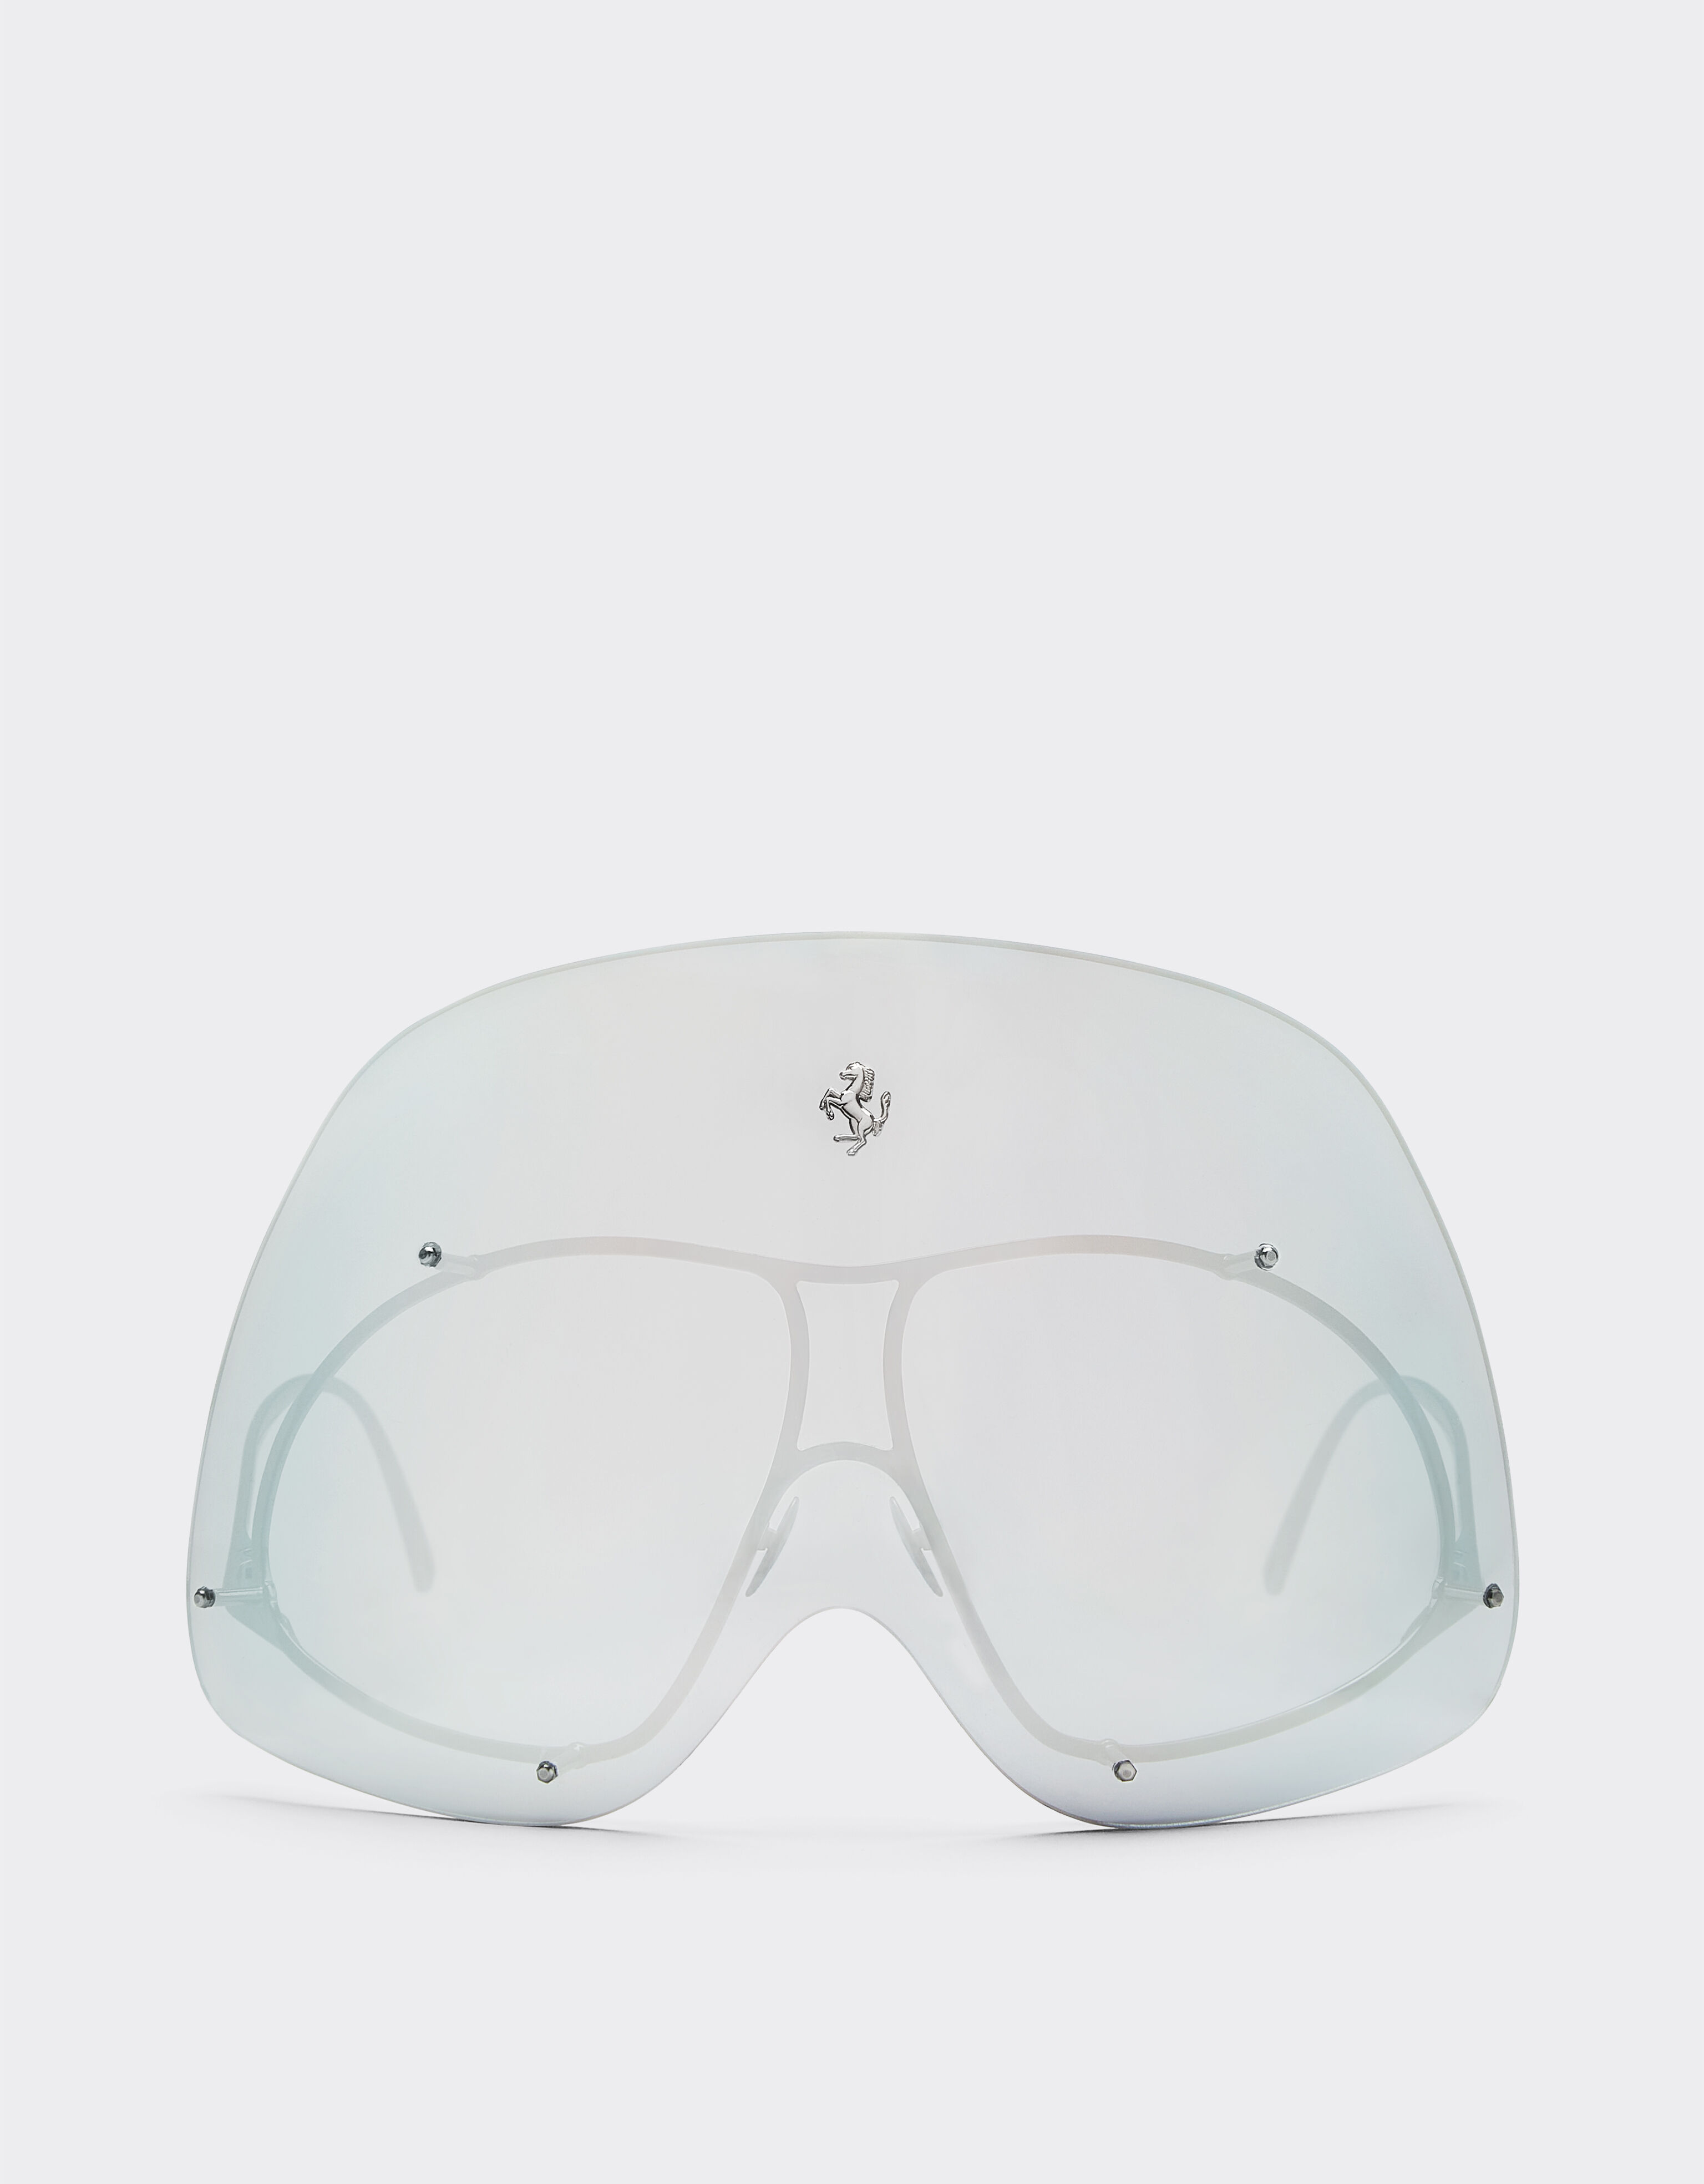 Ferrari Ferrari Limited Edition gunmetal sunglasses with mirrored shield Optical White F1258f